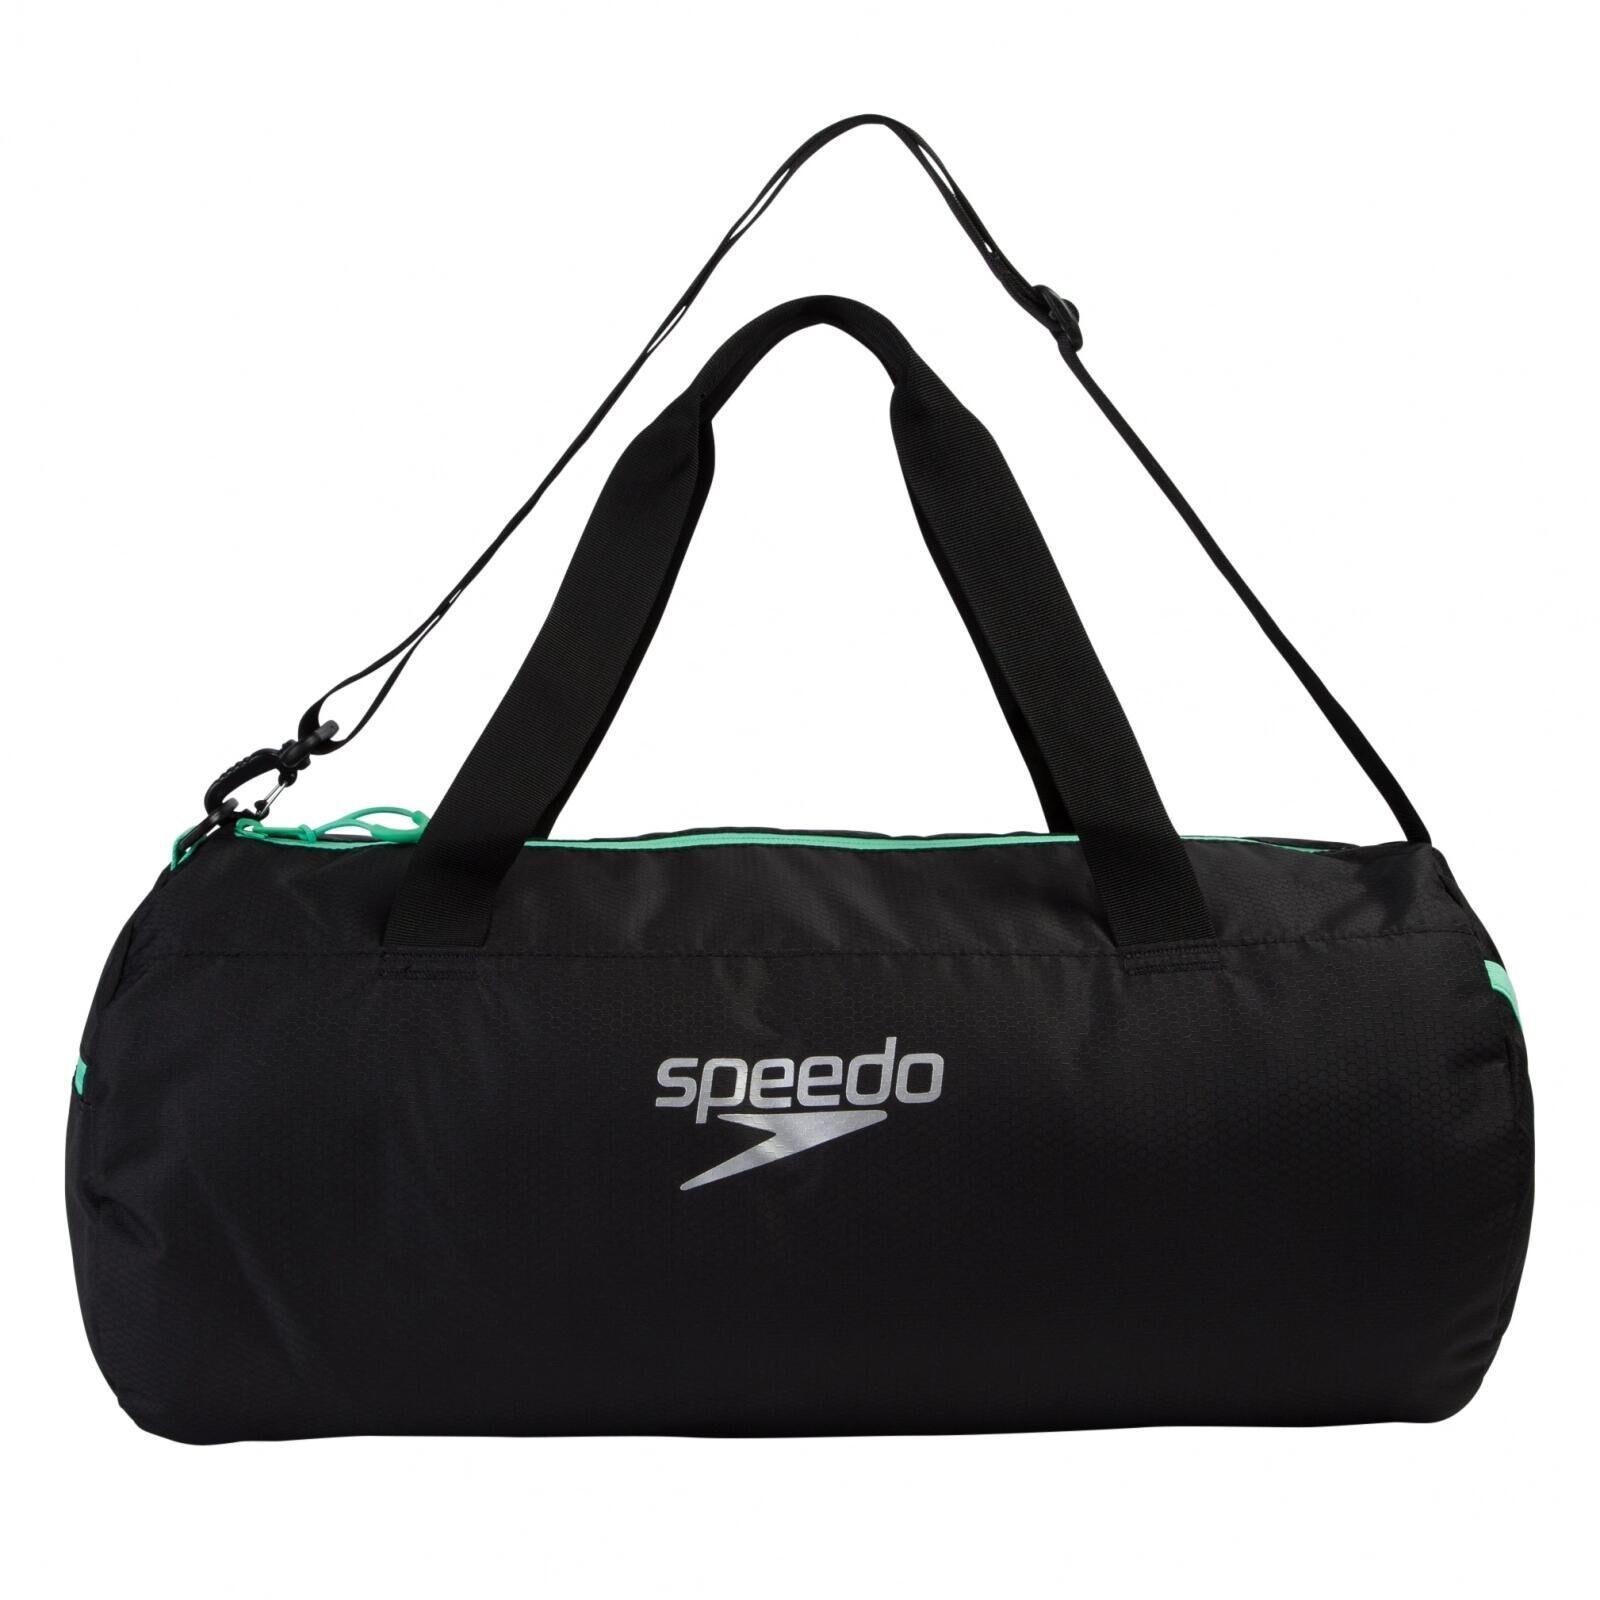 SPEEDO Adult Unisex Duffle Bag